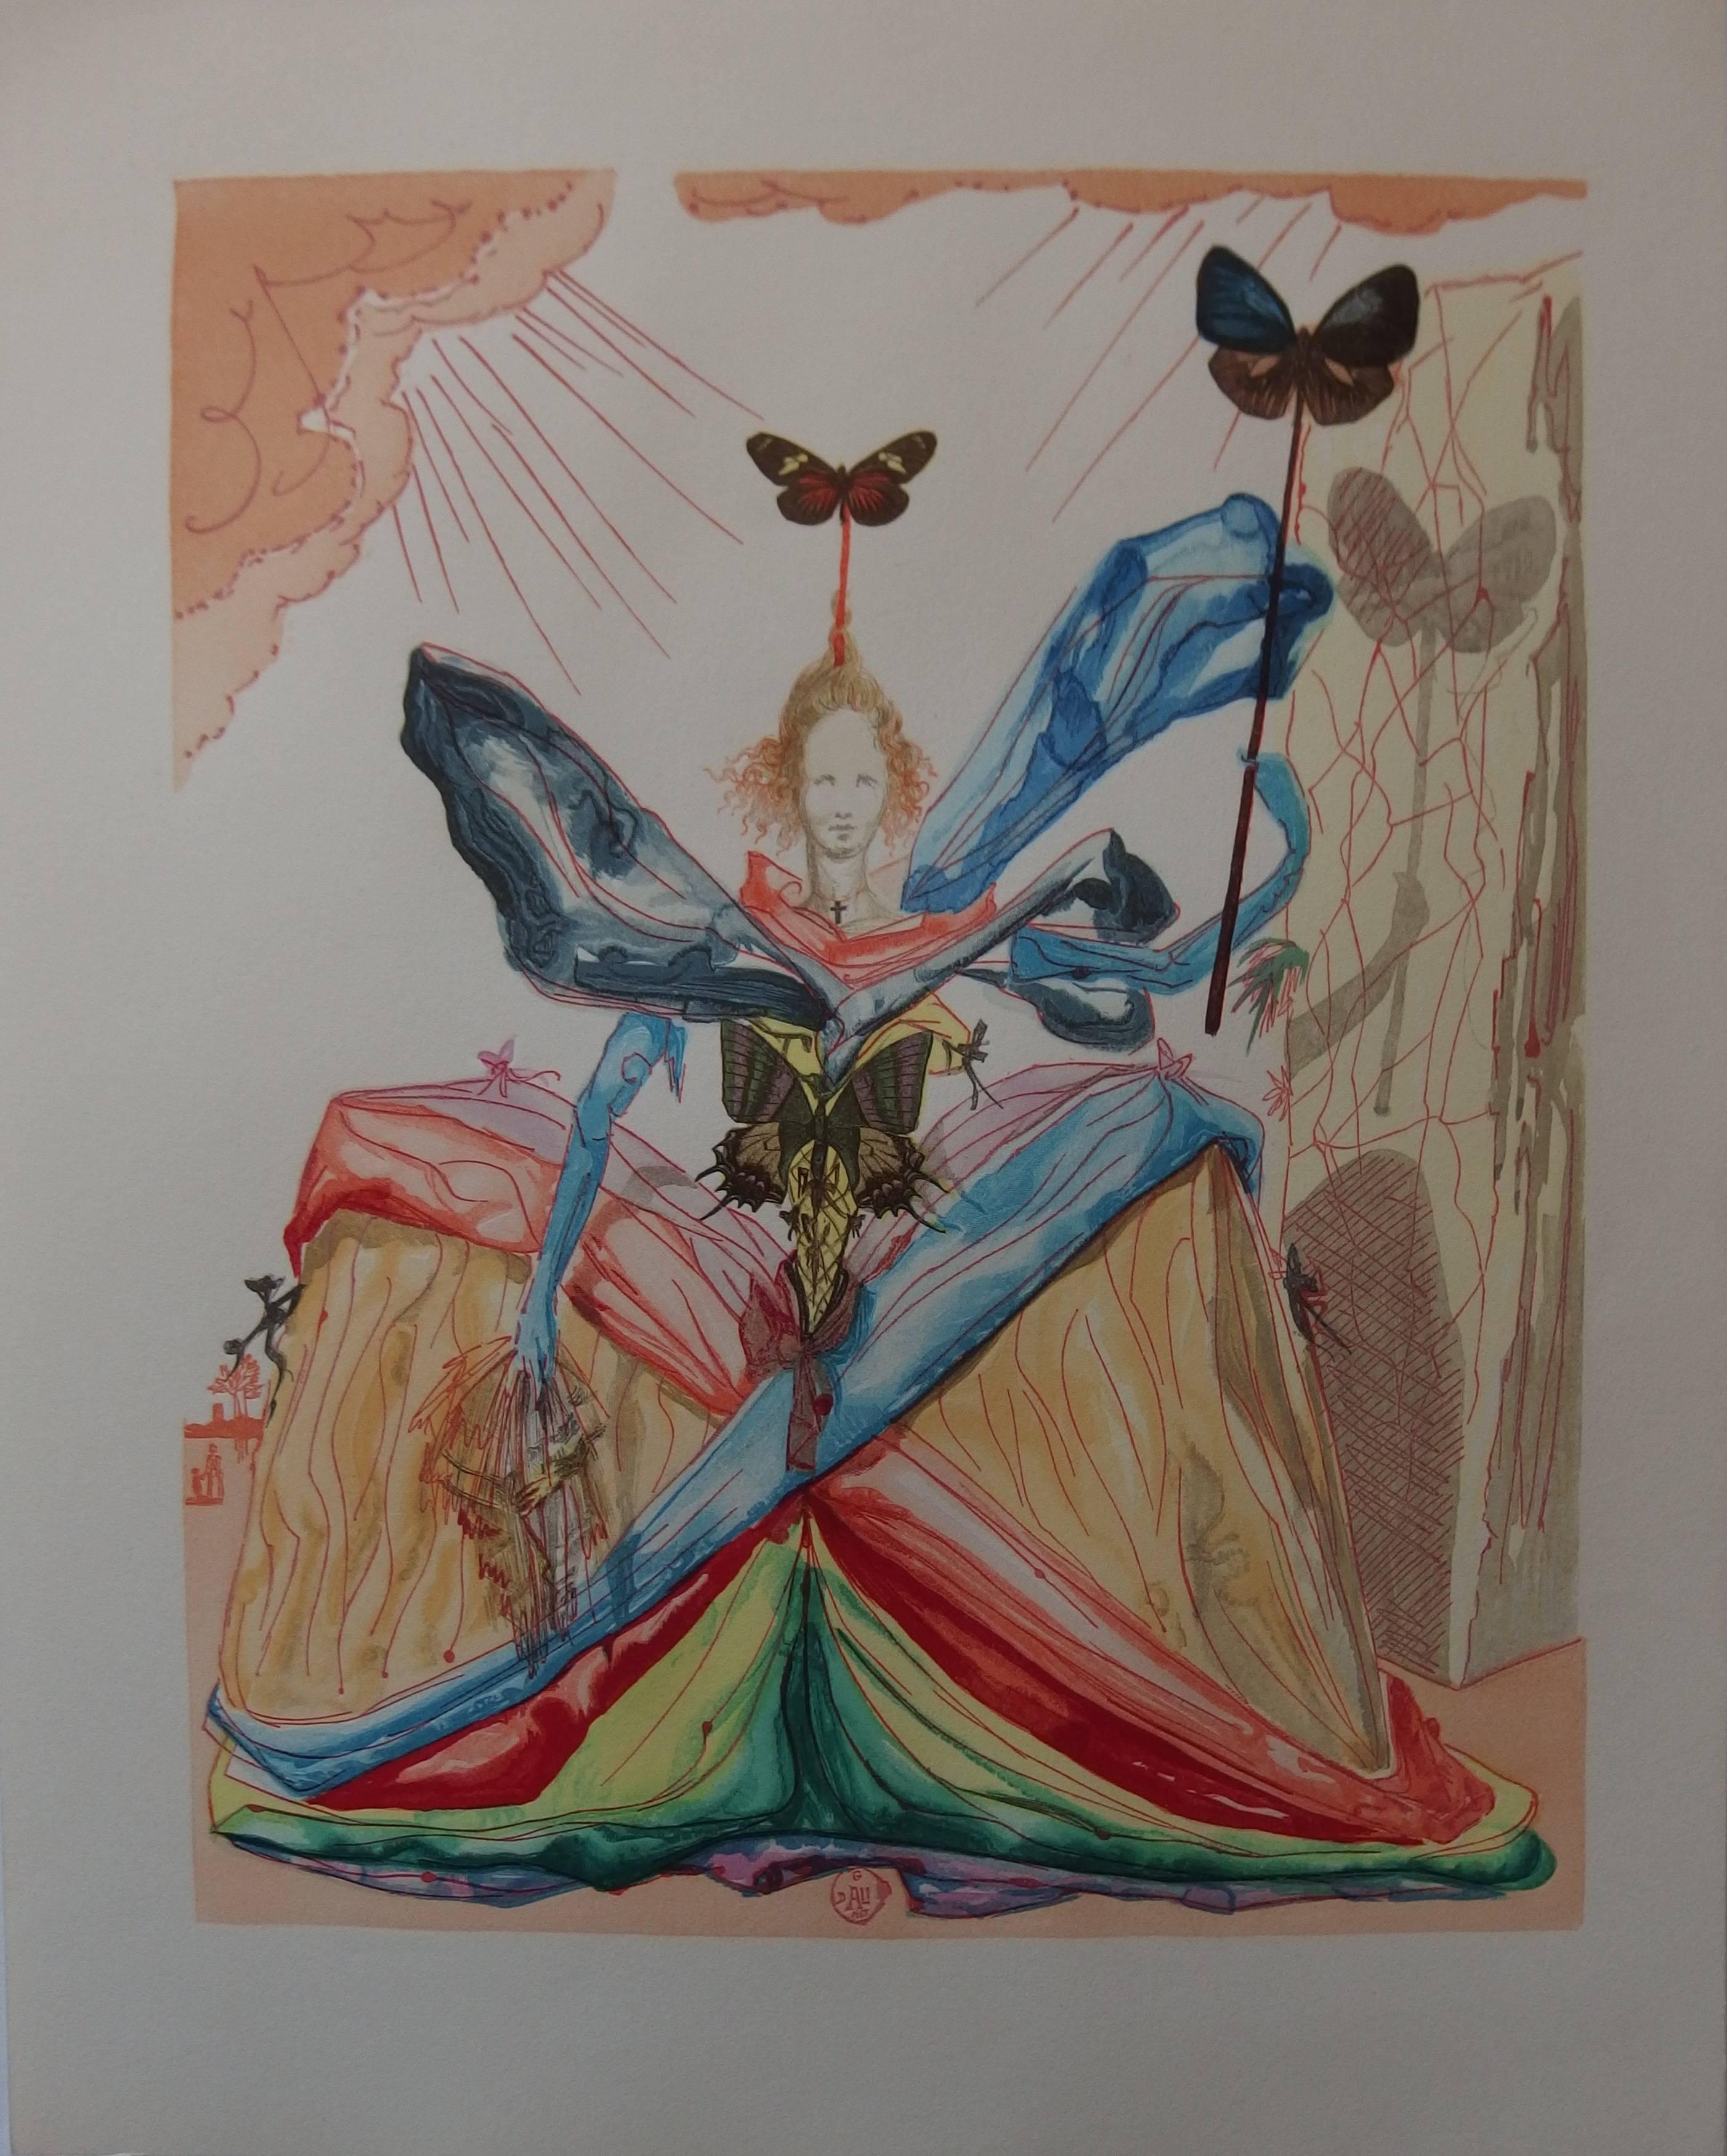 Salvador Dalí Figurative Print - Tricorne : Woman with Butterflies - Original woodcut - 1959